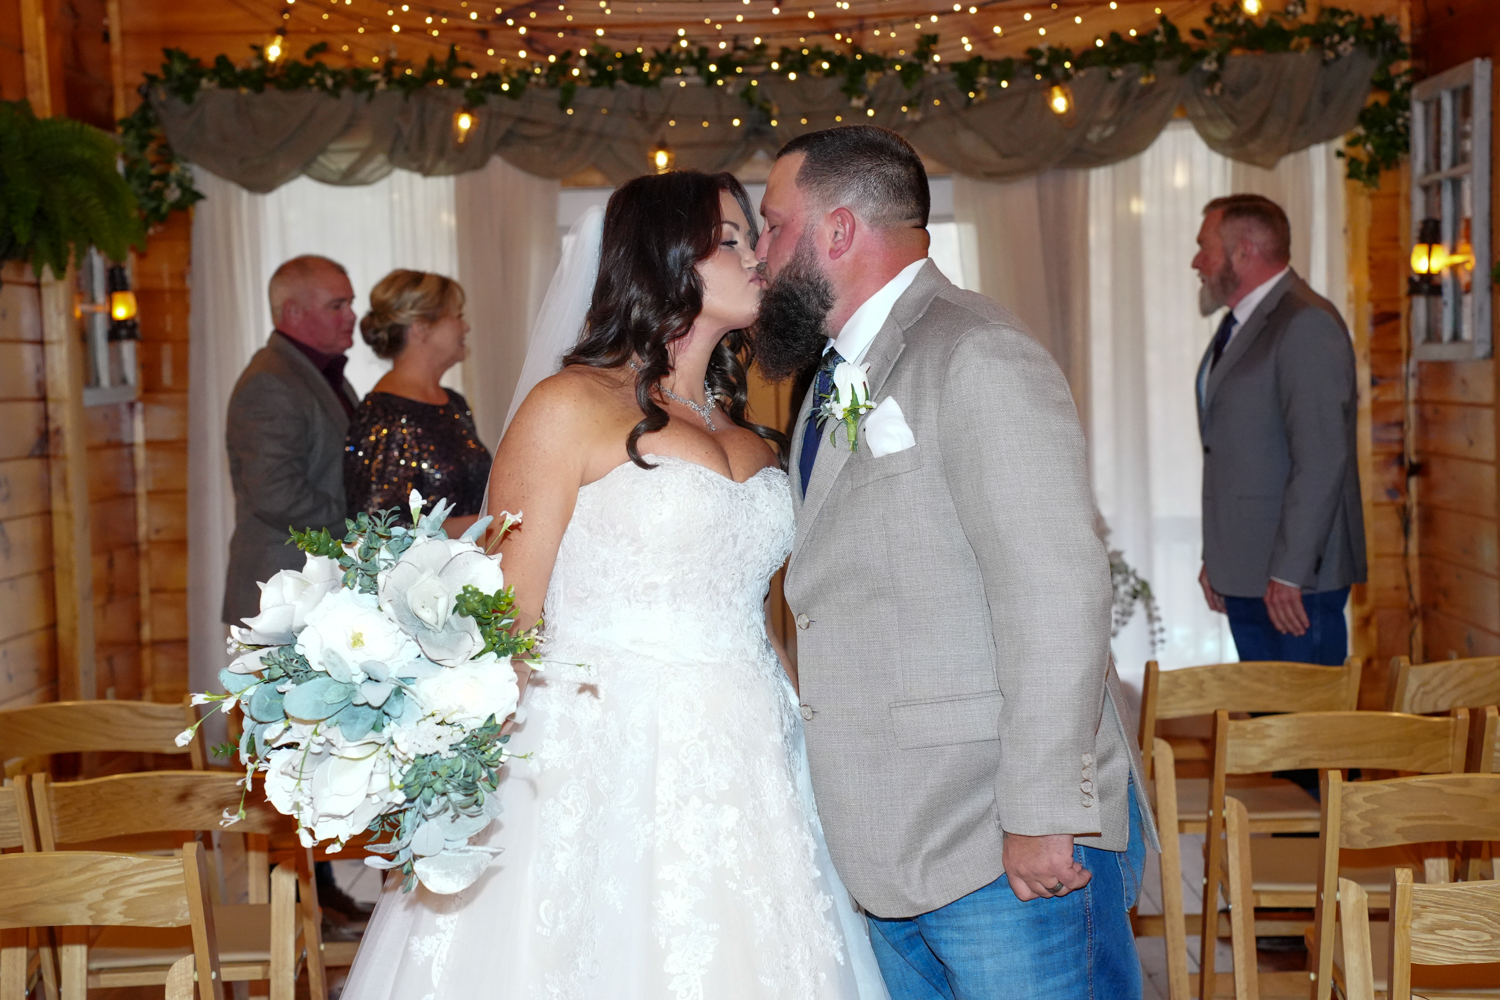 Couple kissing in a wedding chapel under warm twinkling lights